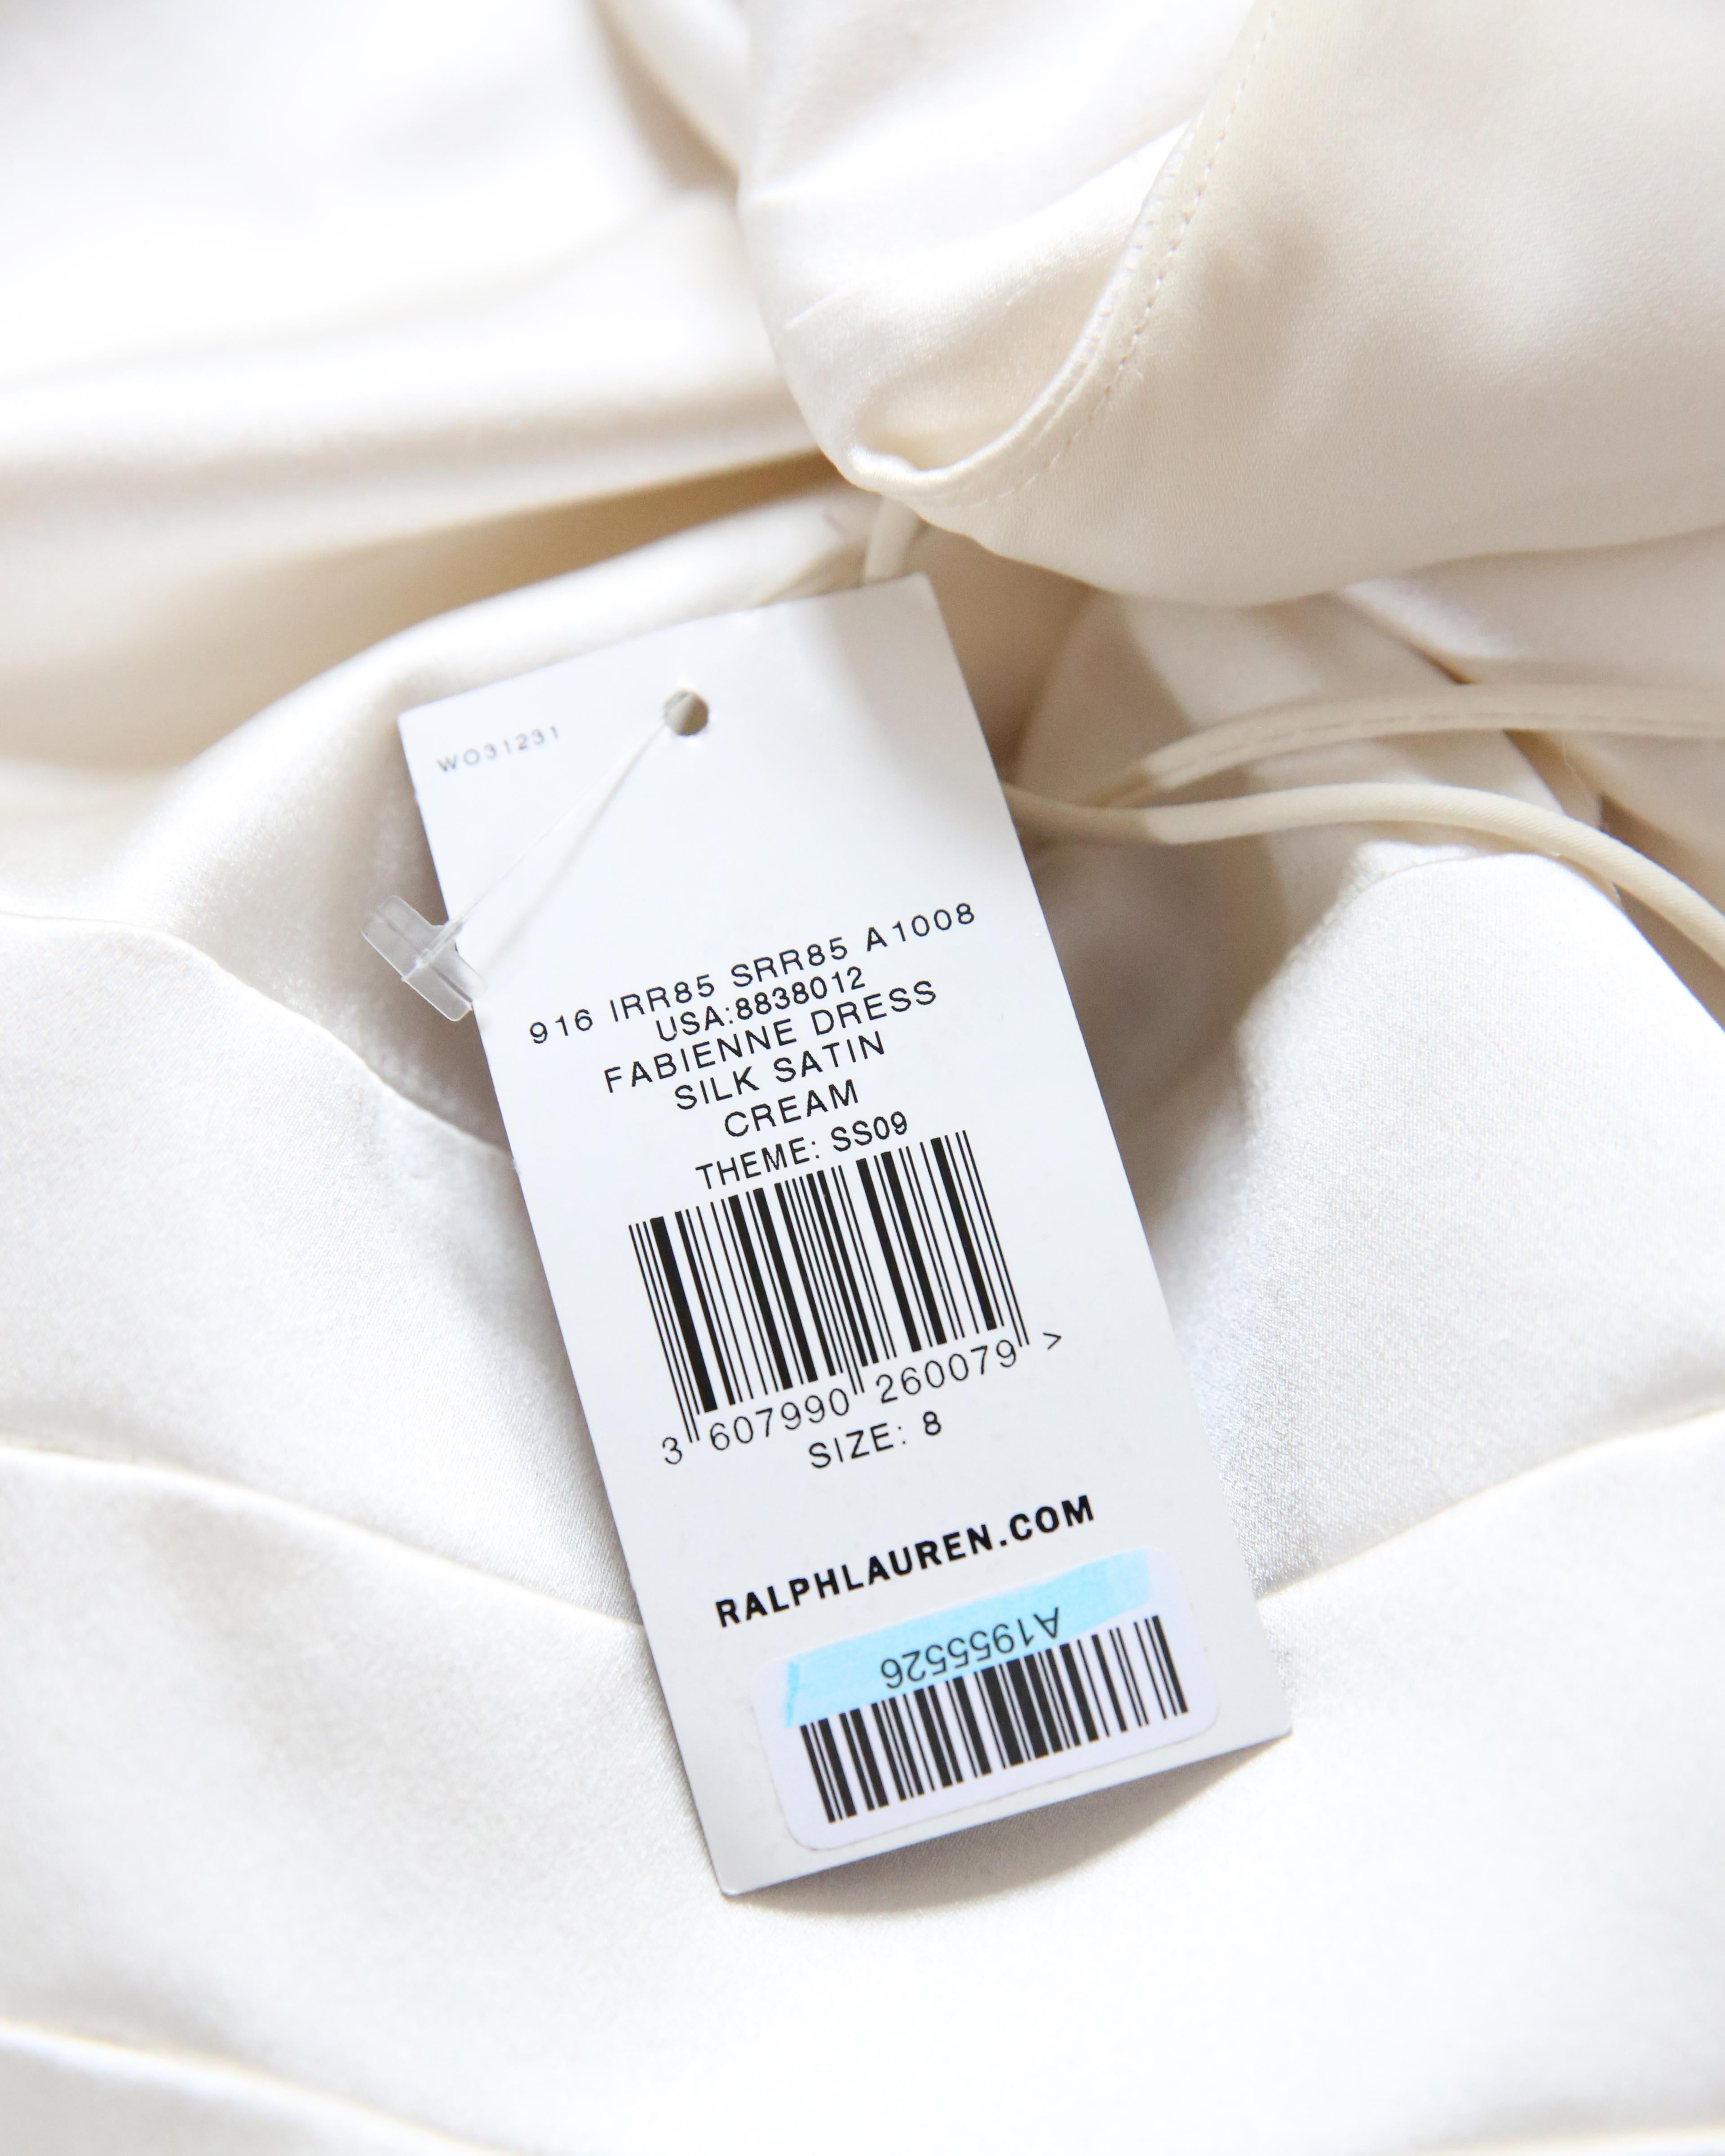 Ralph Lauren S/S 2009 white ivory silk plunging halter neck wedding gown dress For Sale 12